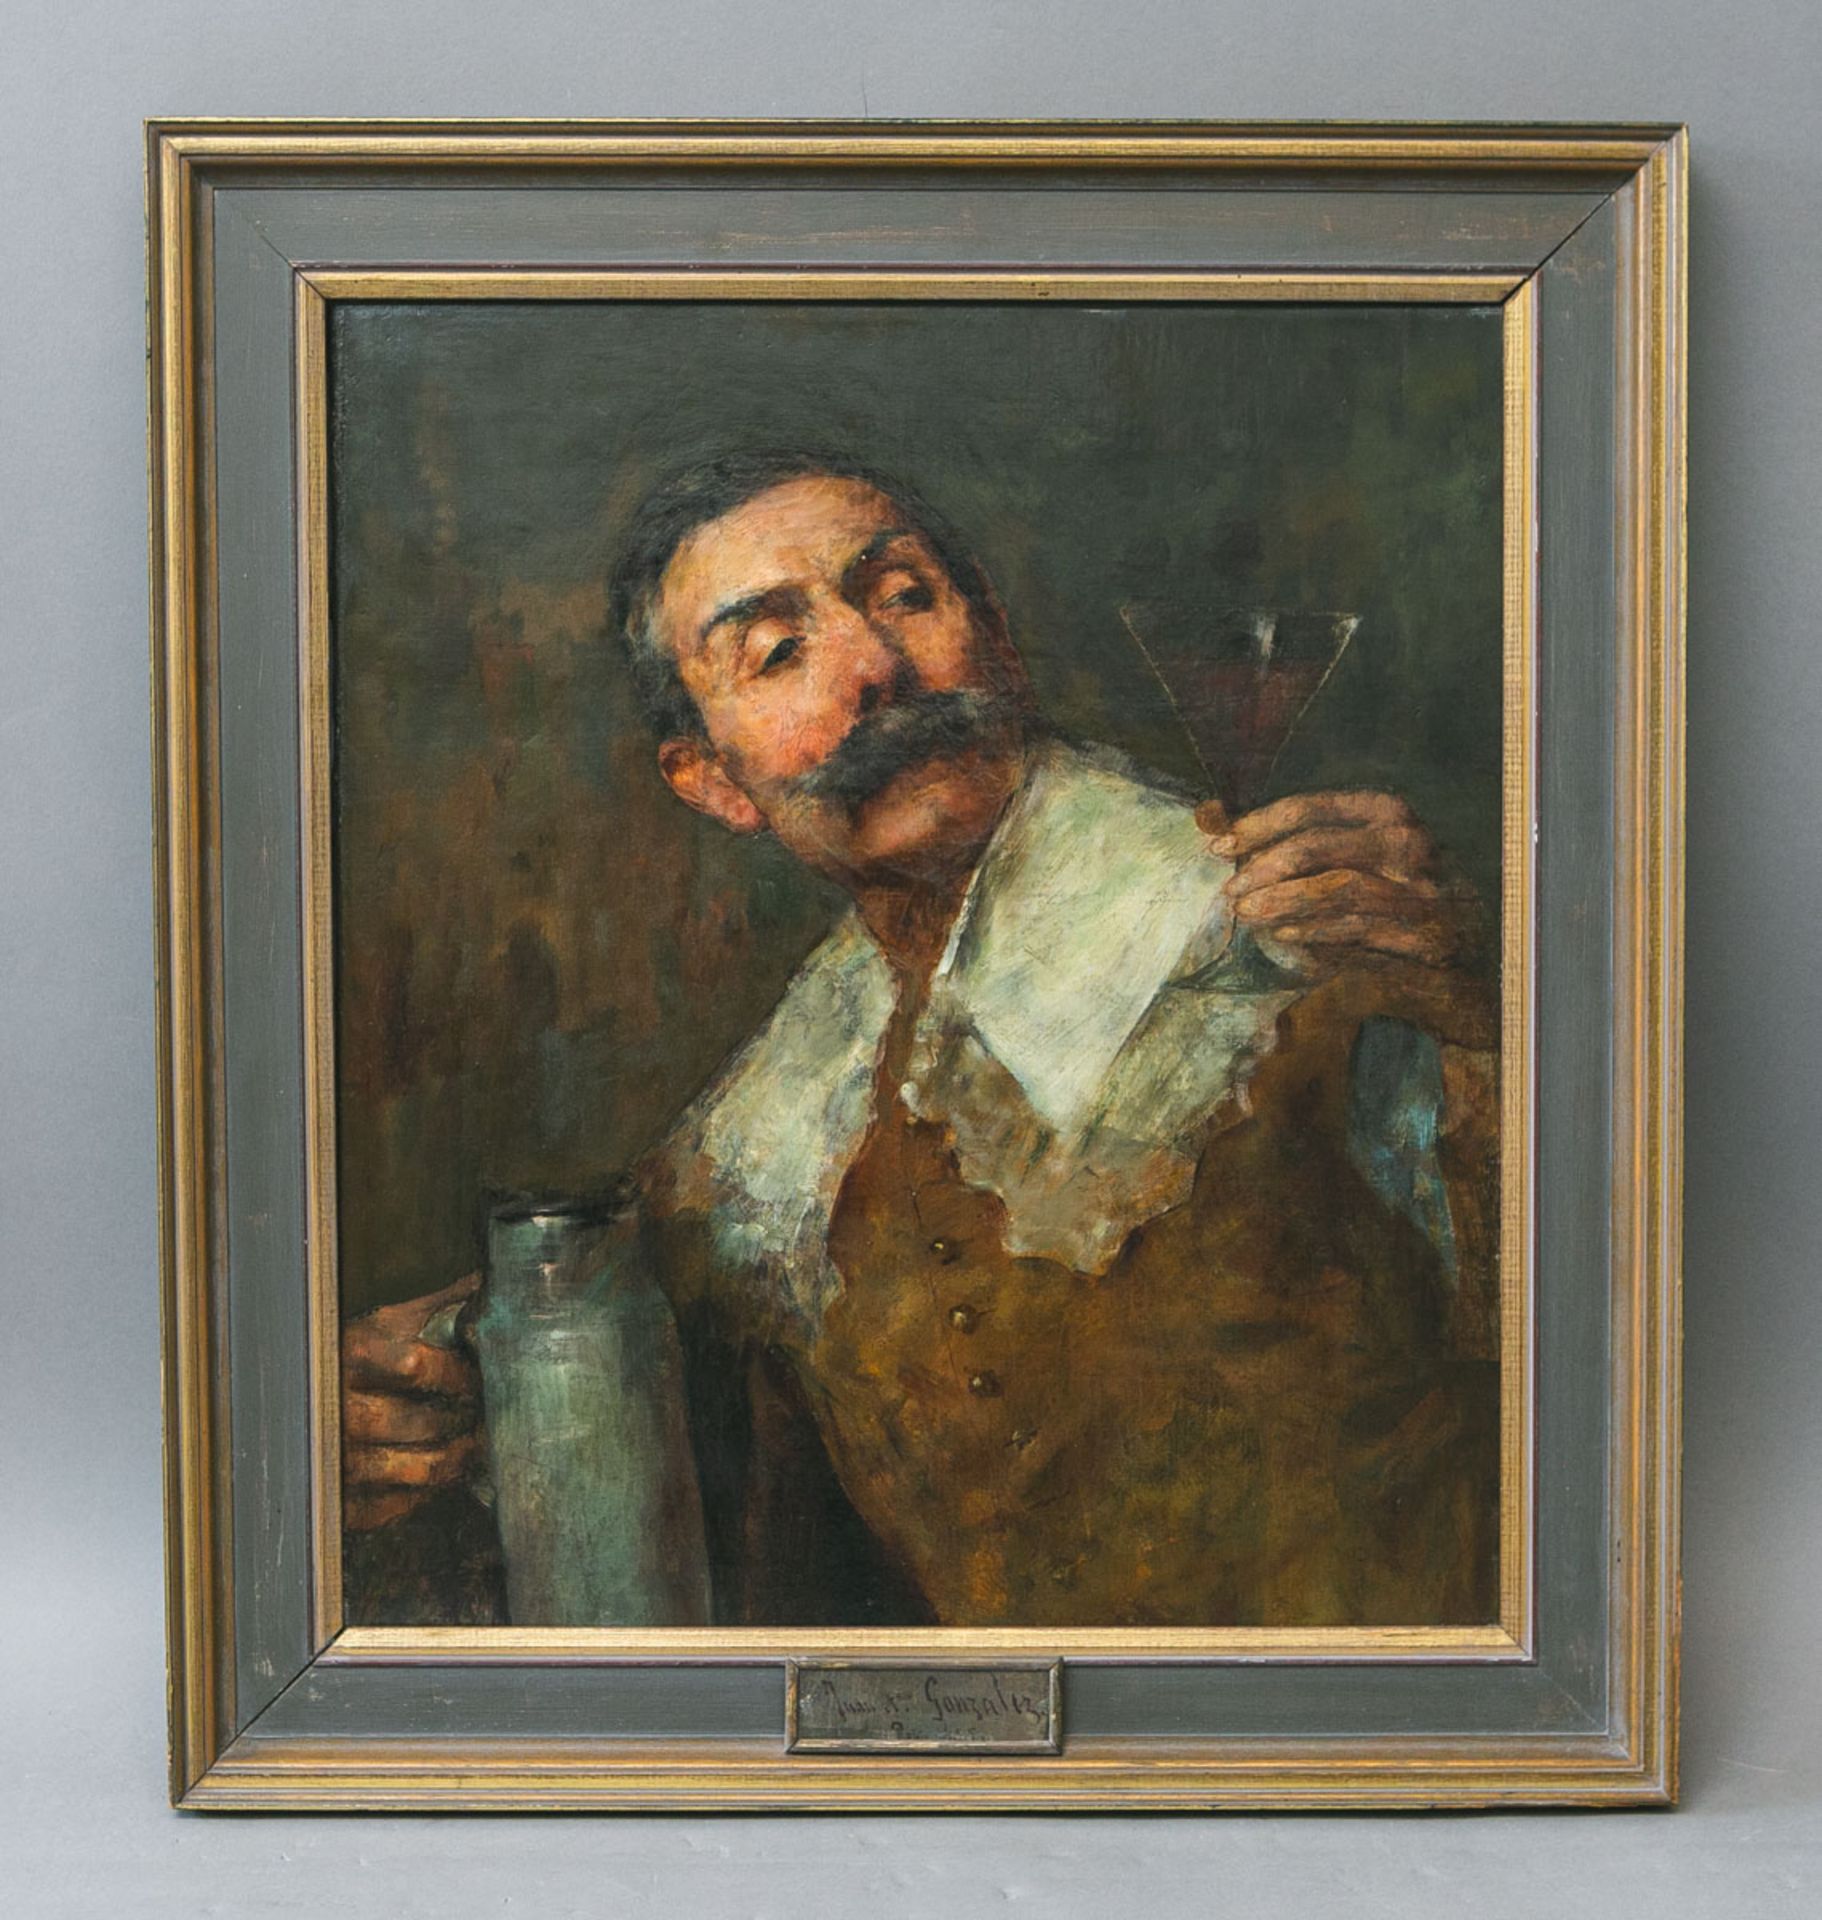 Gonzales, Juan Antonio (1842 - 1914), "Der edle Tropfen"